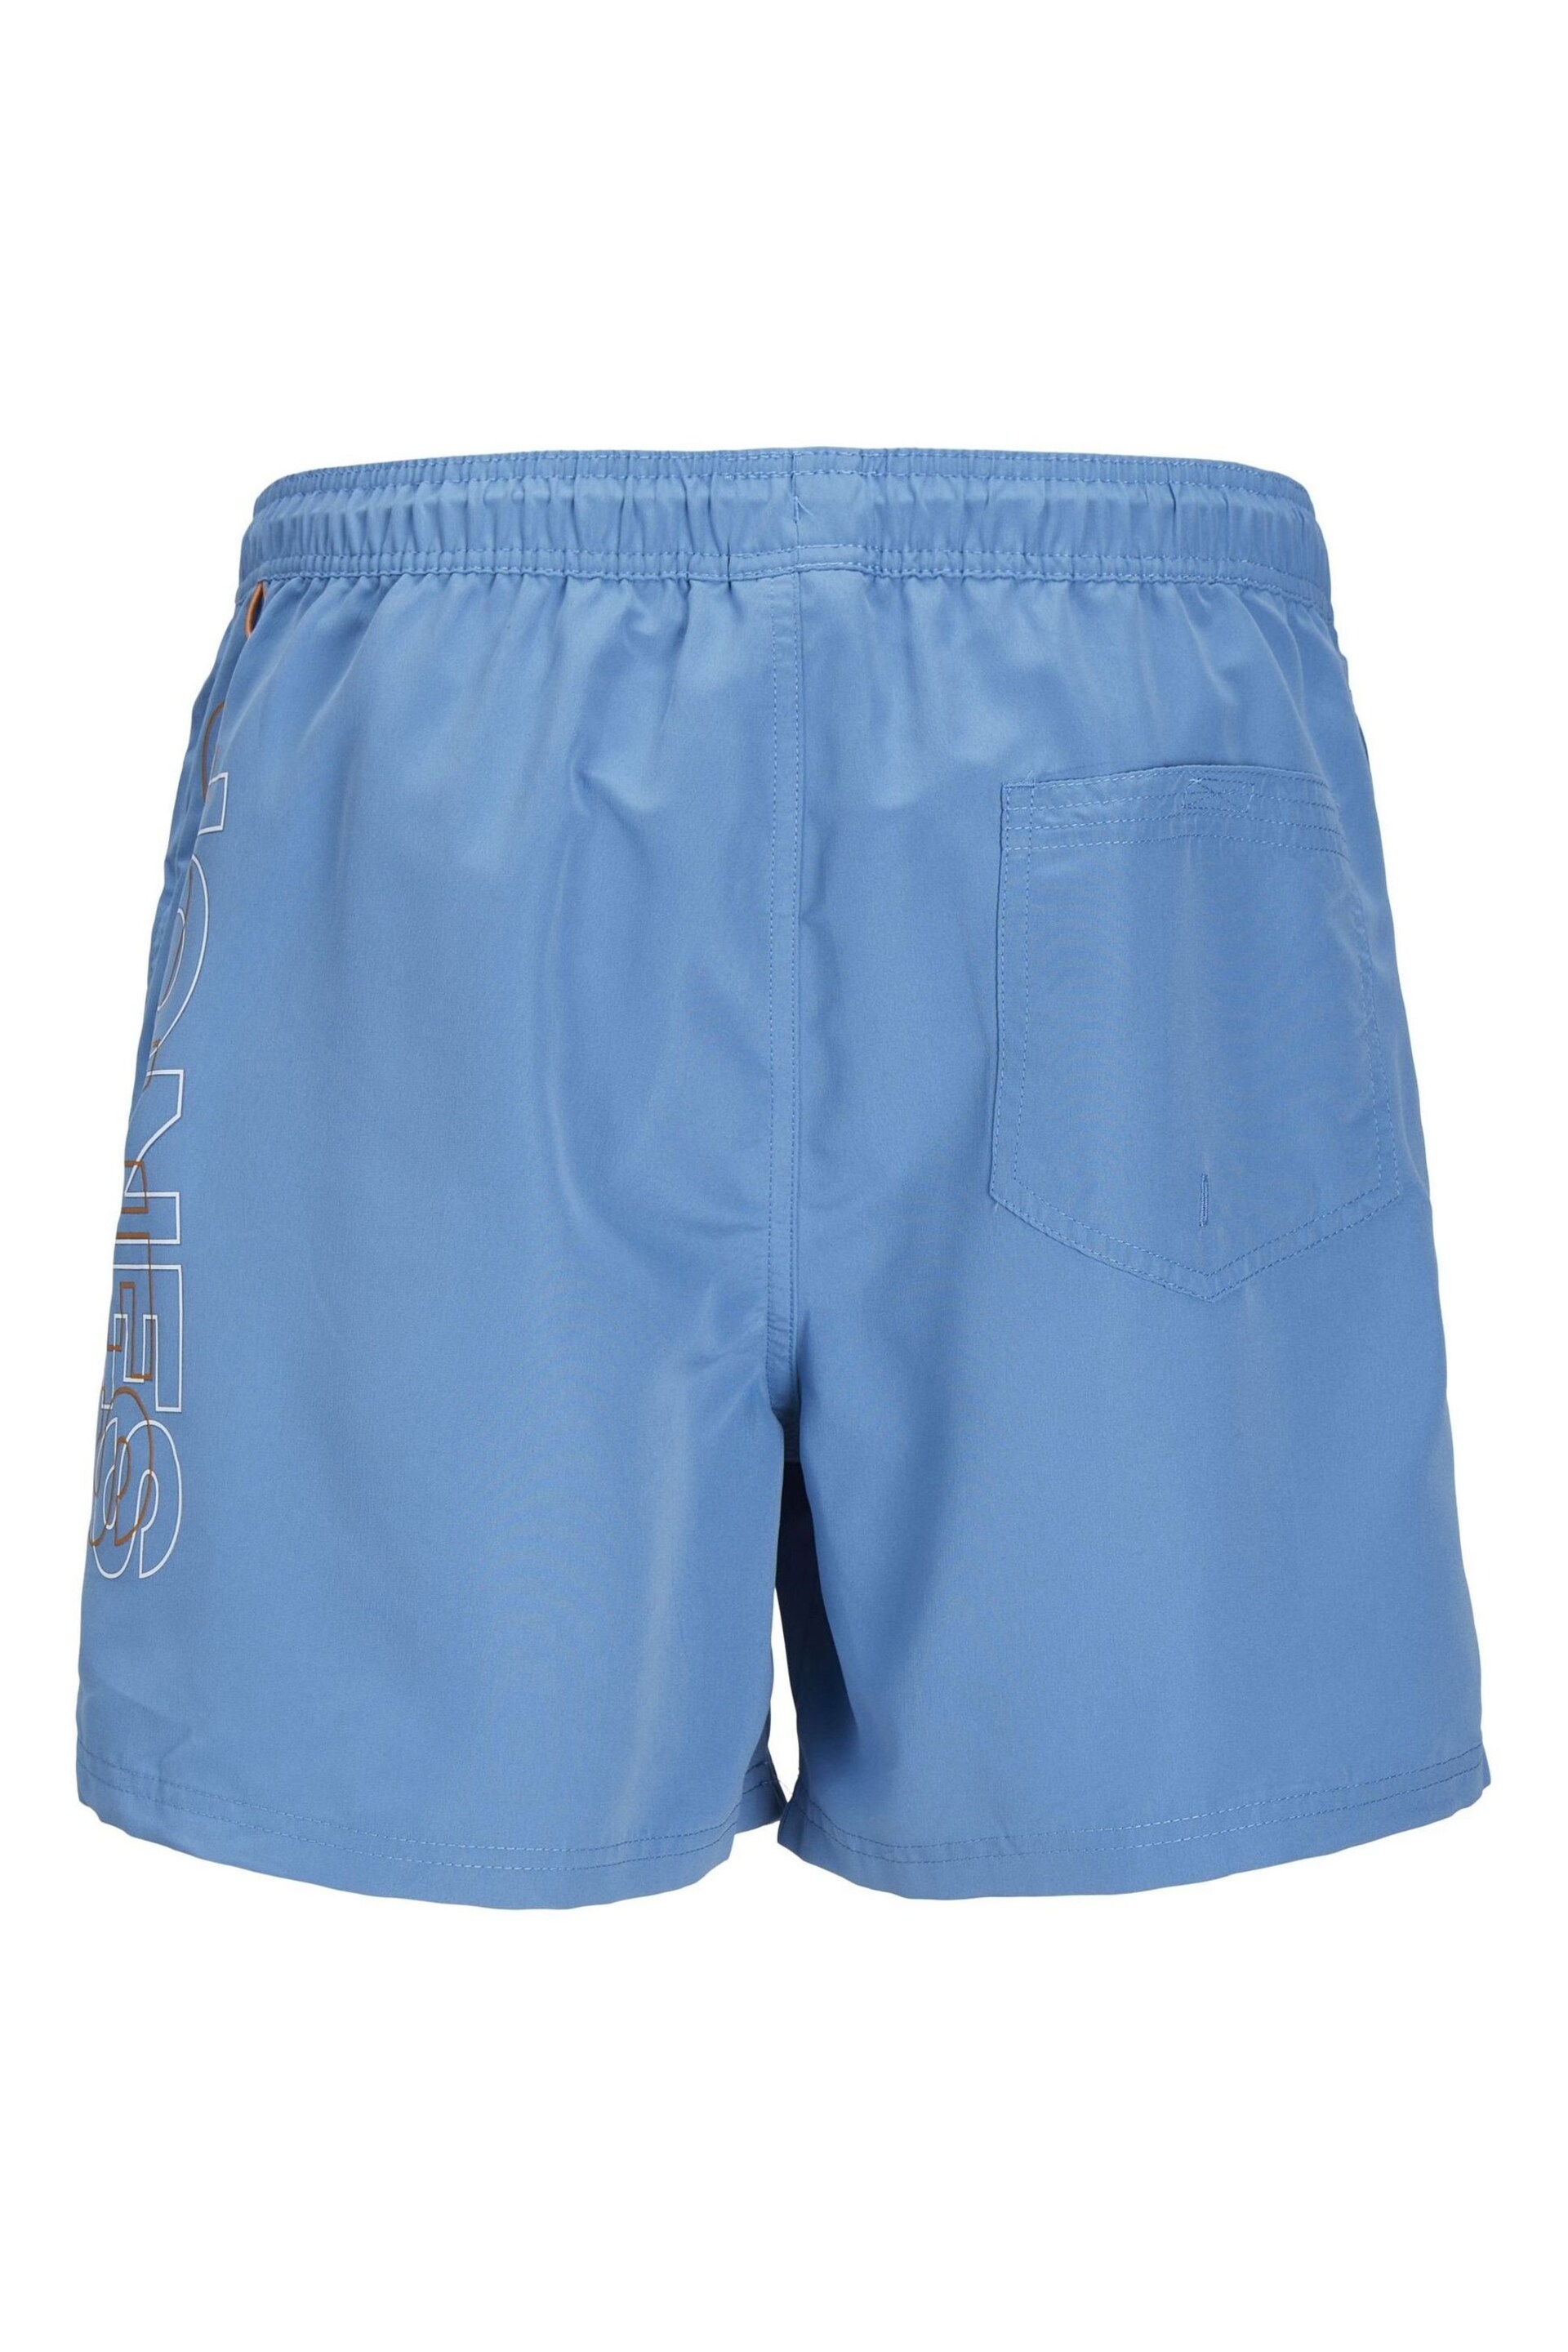 JACK & JONES Blue Regular Fit Swim Shorts - Image 5 of 5